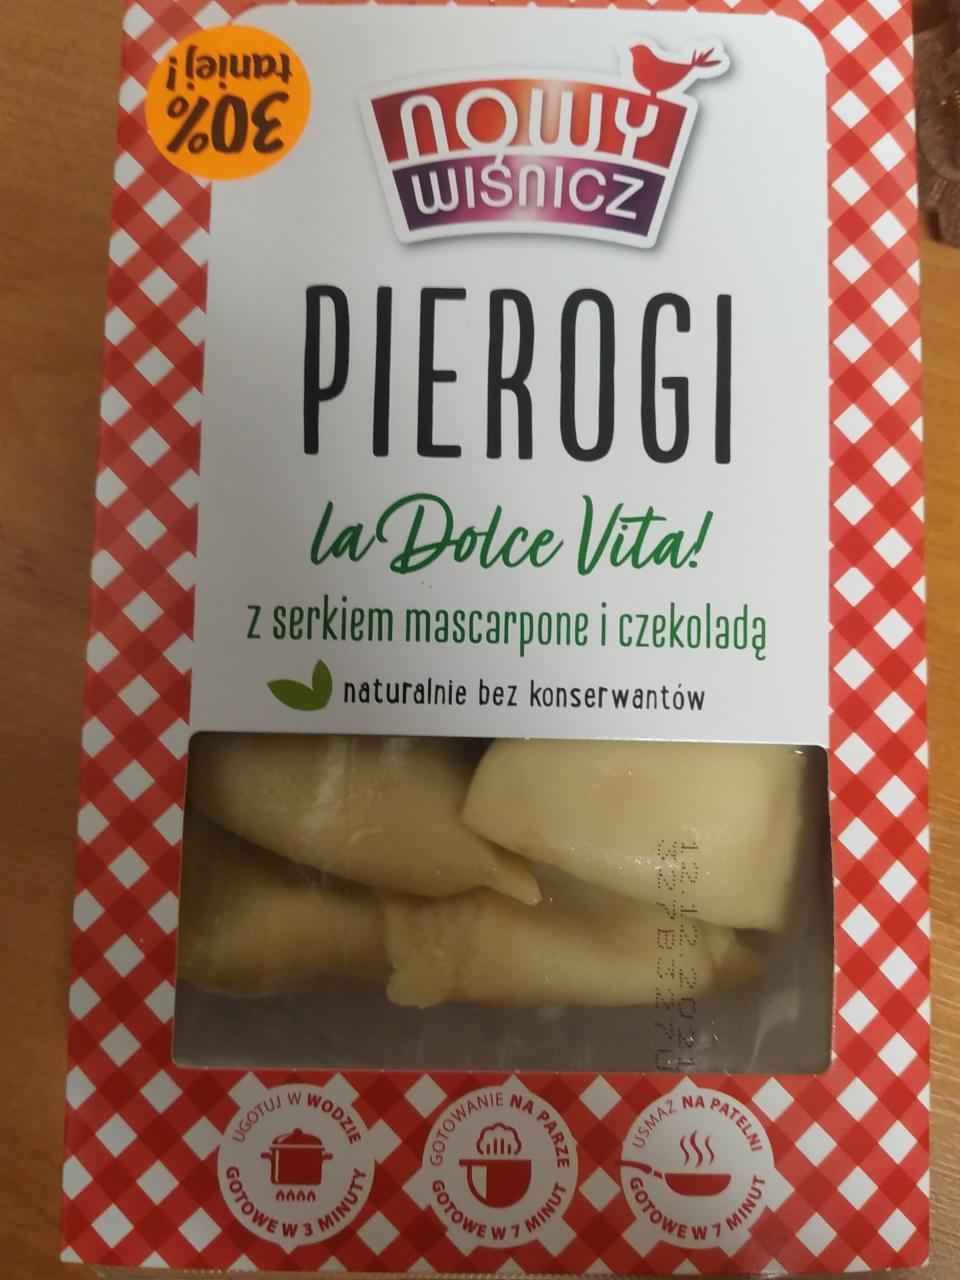 Фото - Pierogi с сыром маскарпоне и шоколадом Nowy Wiśnicz